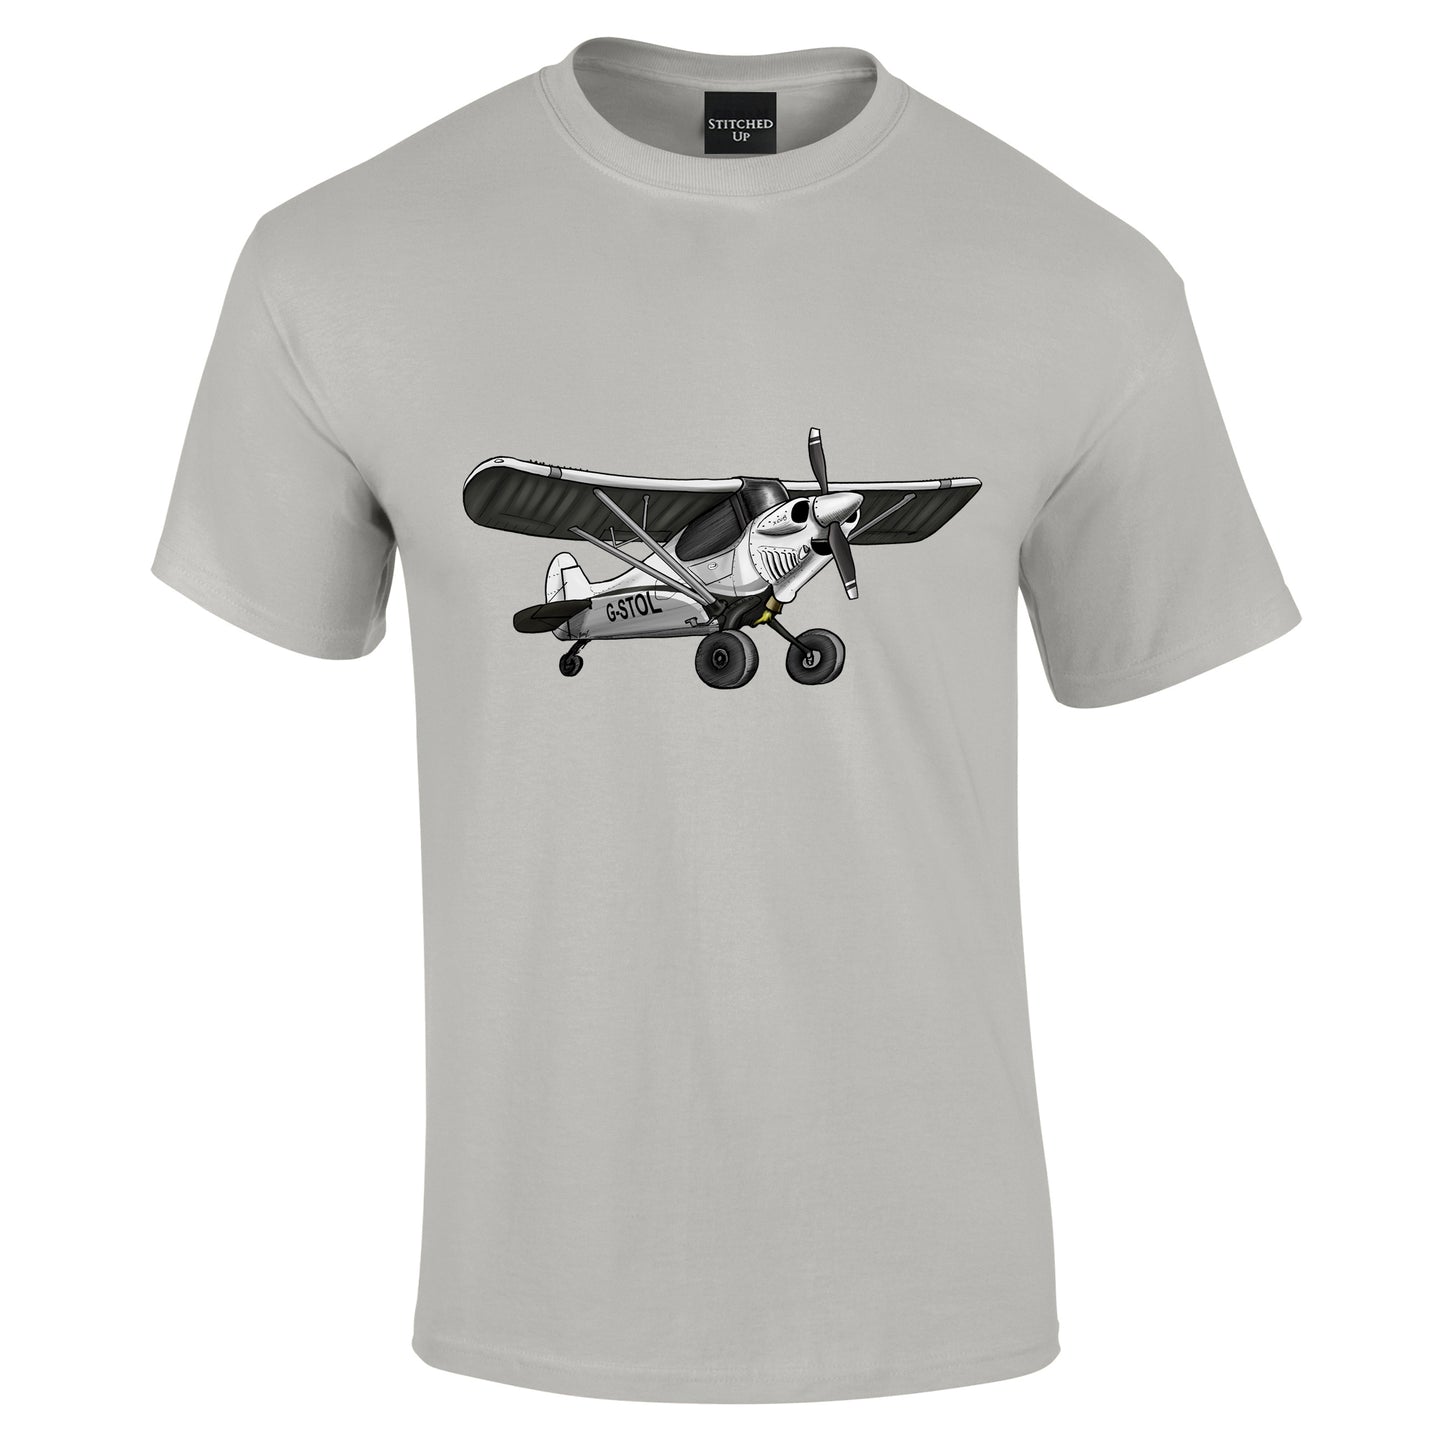 Carbon Super Cub Aircraft T-Shirt G-STOL